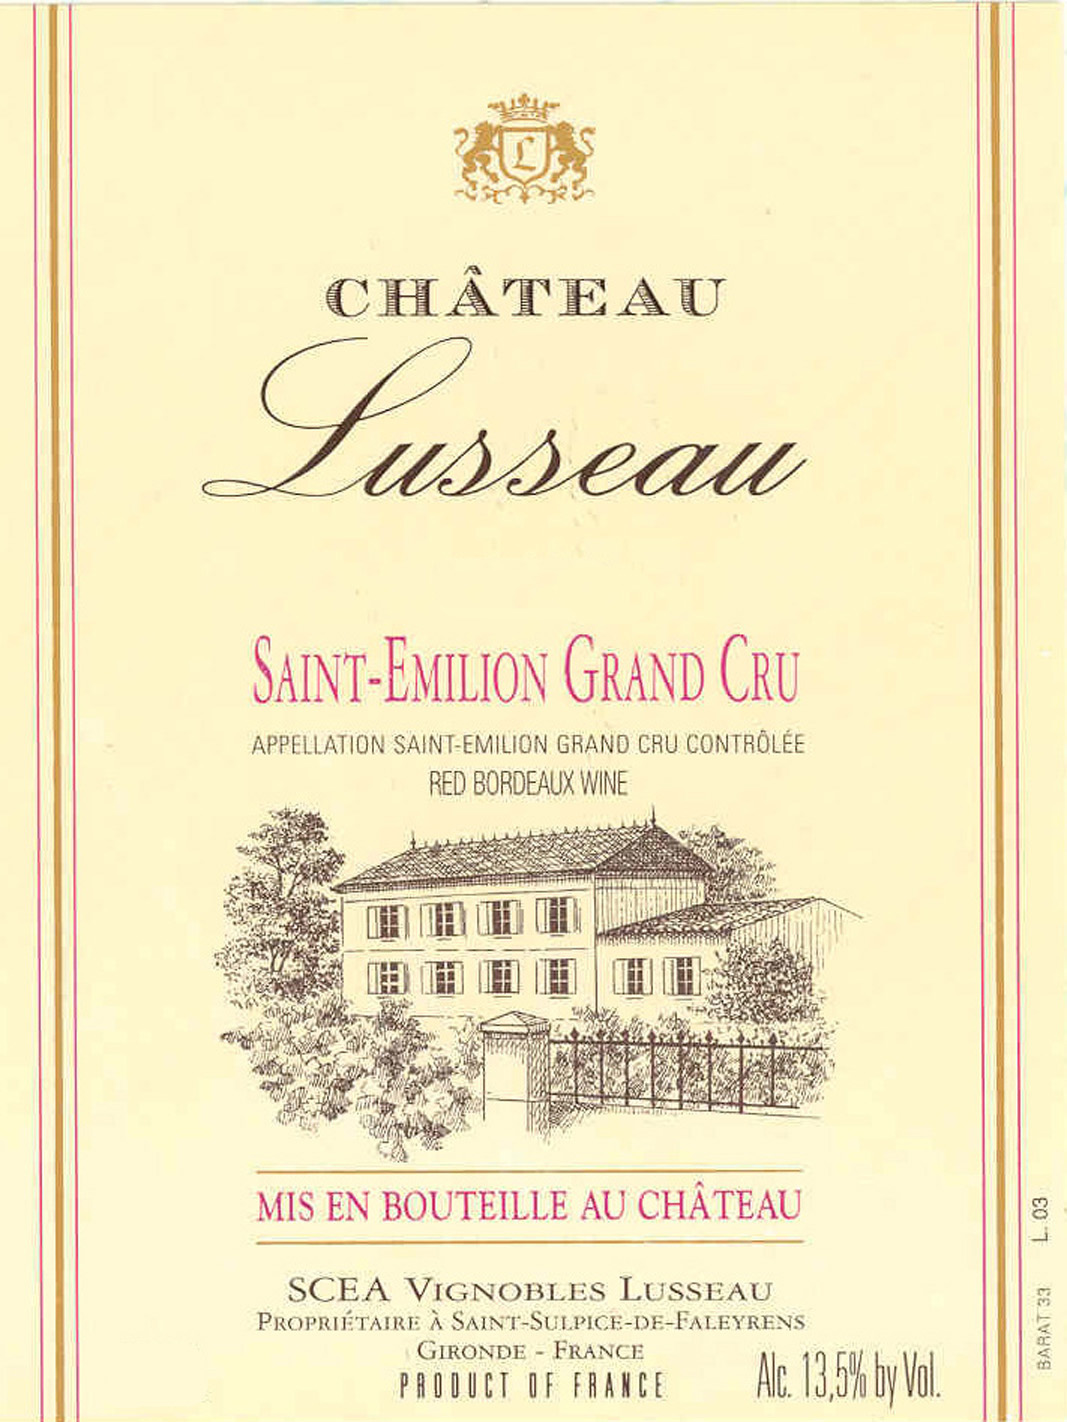 Chateau Lusseau label